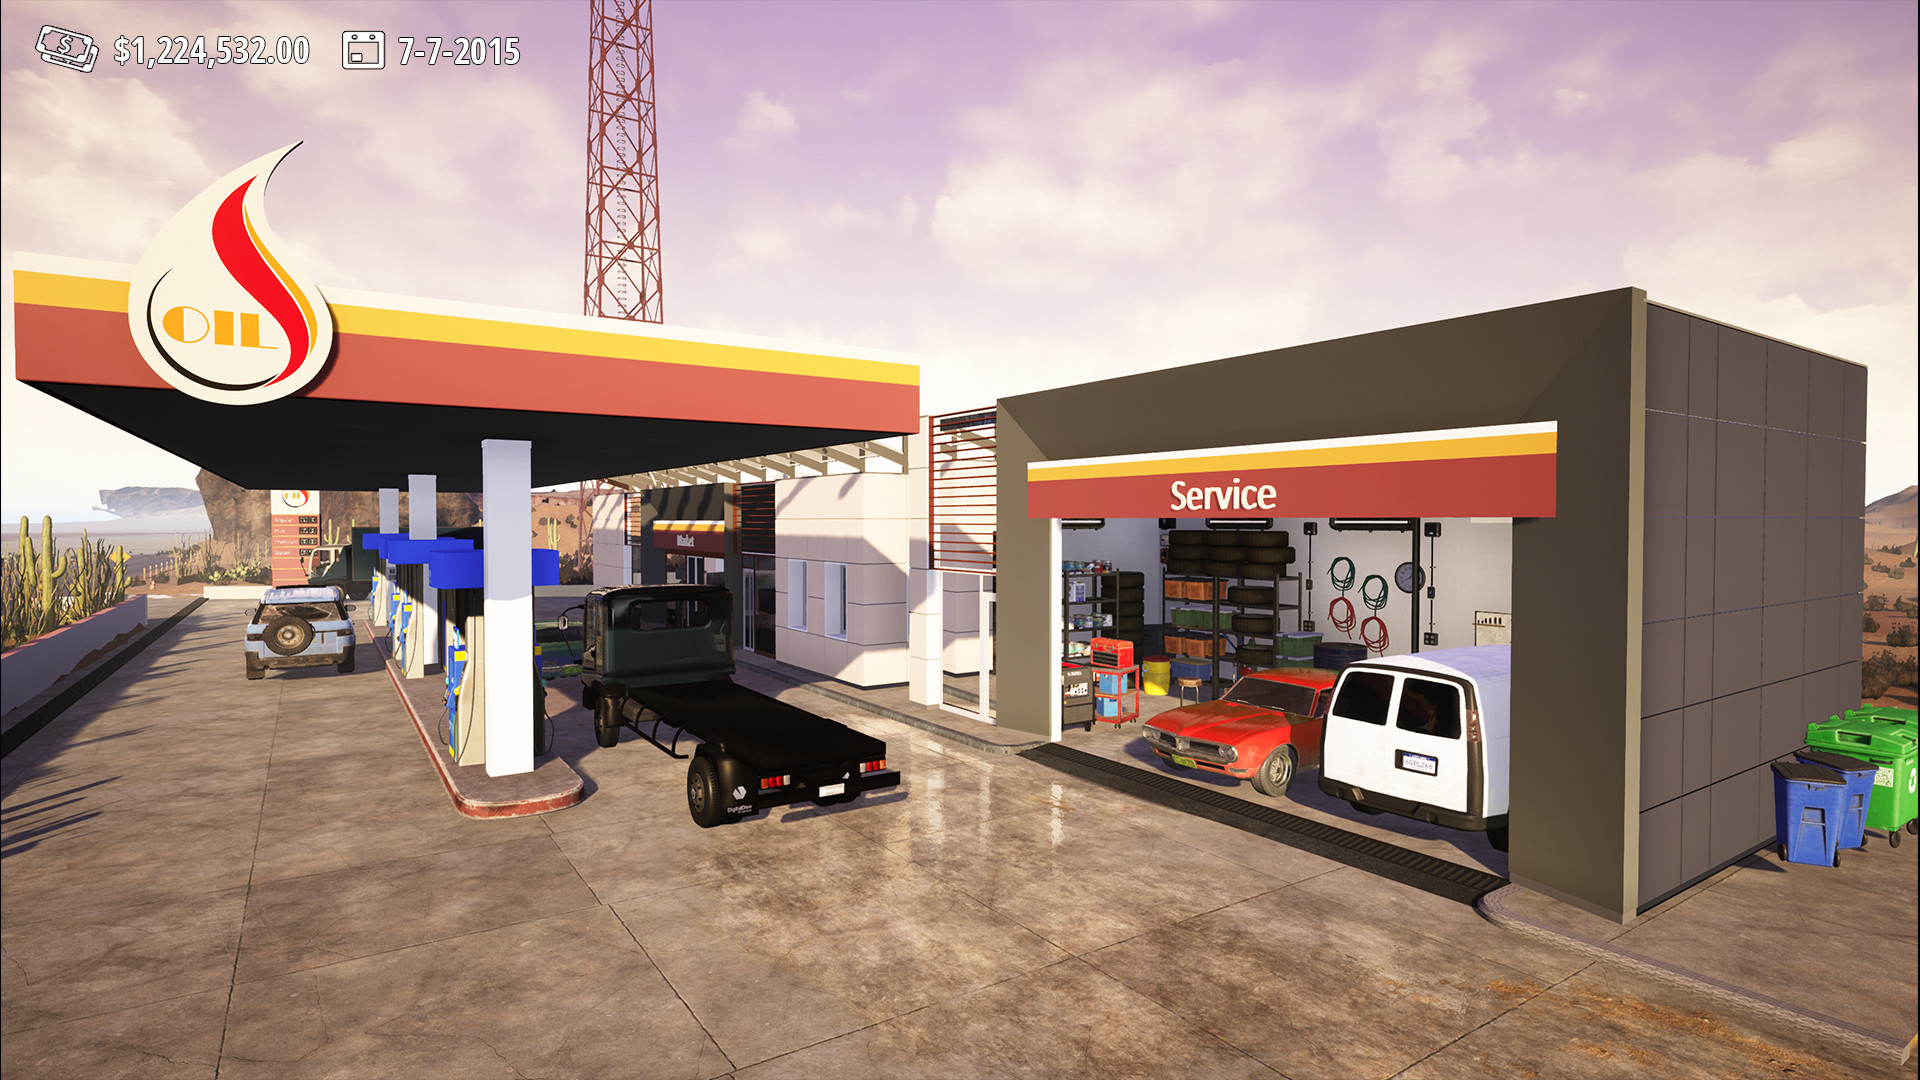 gas station simulator easy money